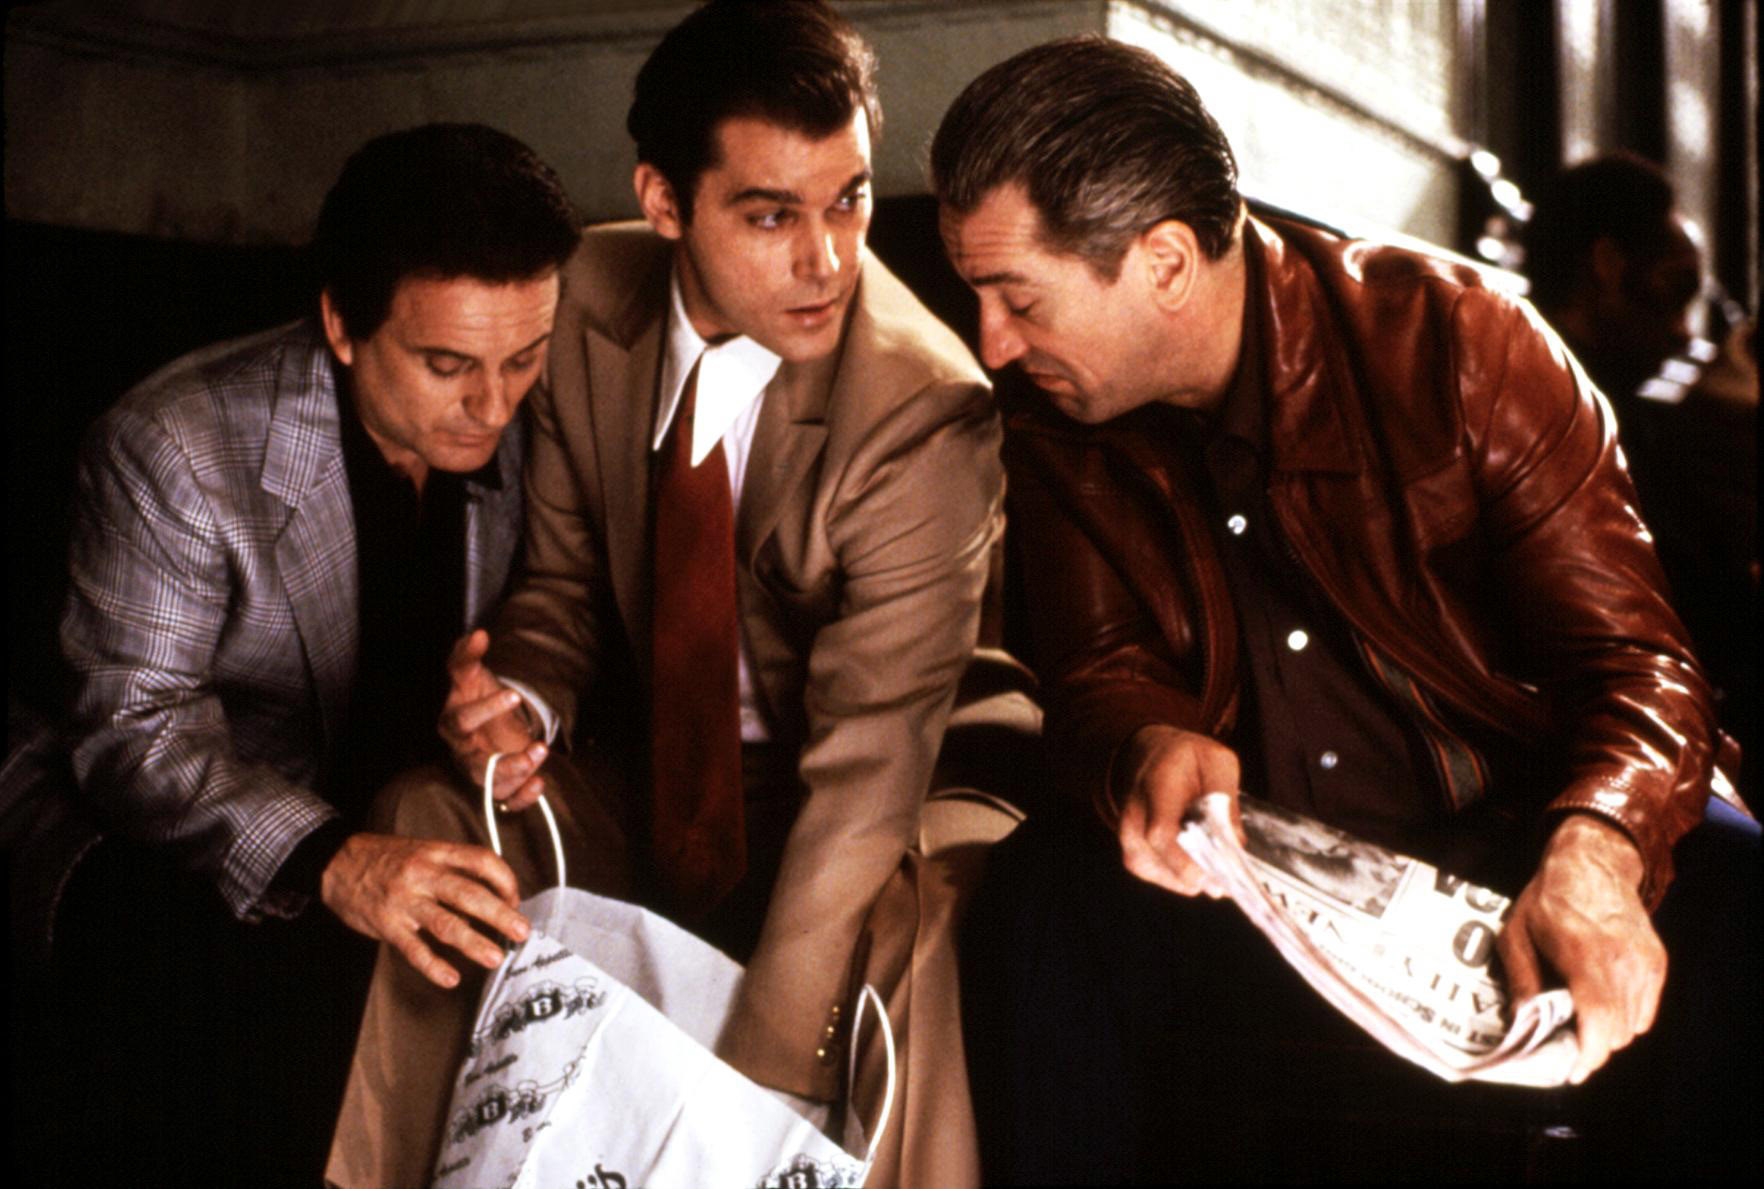 Joe Pesci, Ray Liotta, and Robert De Niro